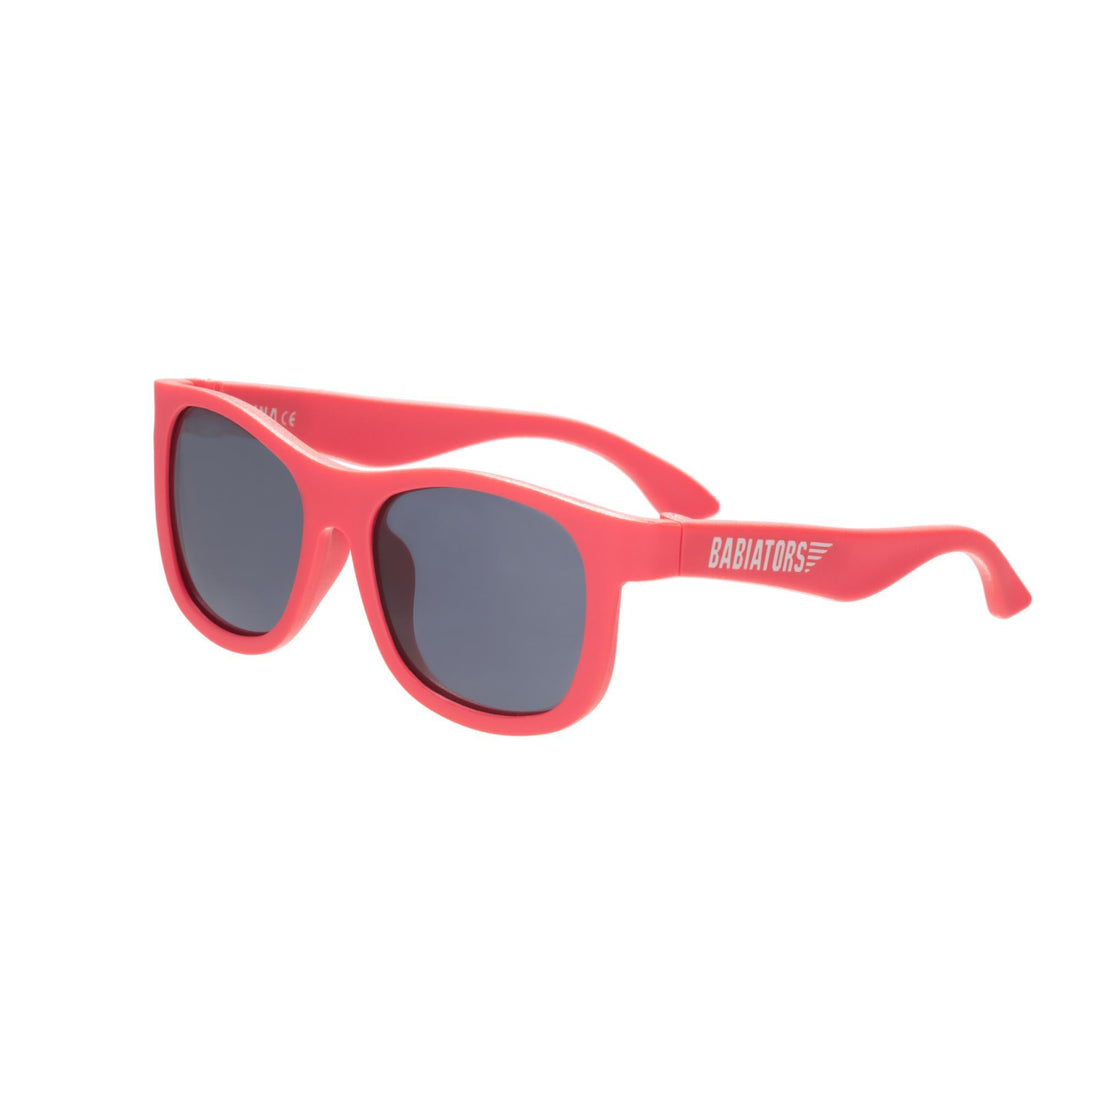 Navigator Sunglasses-Sunglasses-Babiators-Ages 0-2-Red-bluebird baby & kids